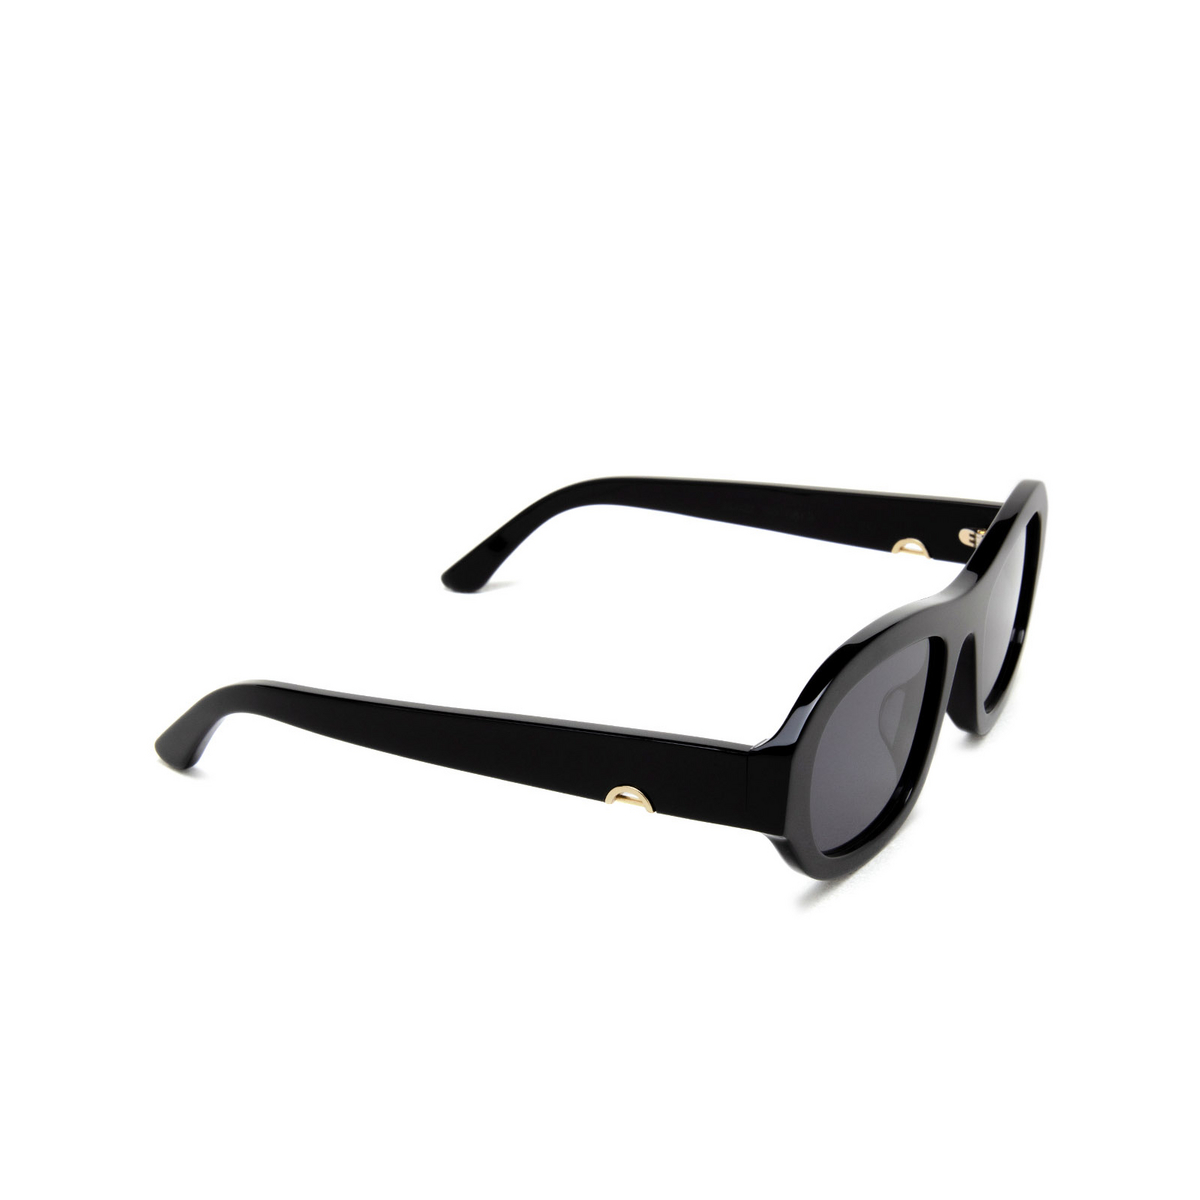 Huma LEE Sunglasses 06 Black - three-quarters view